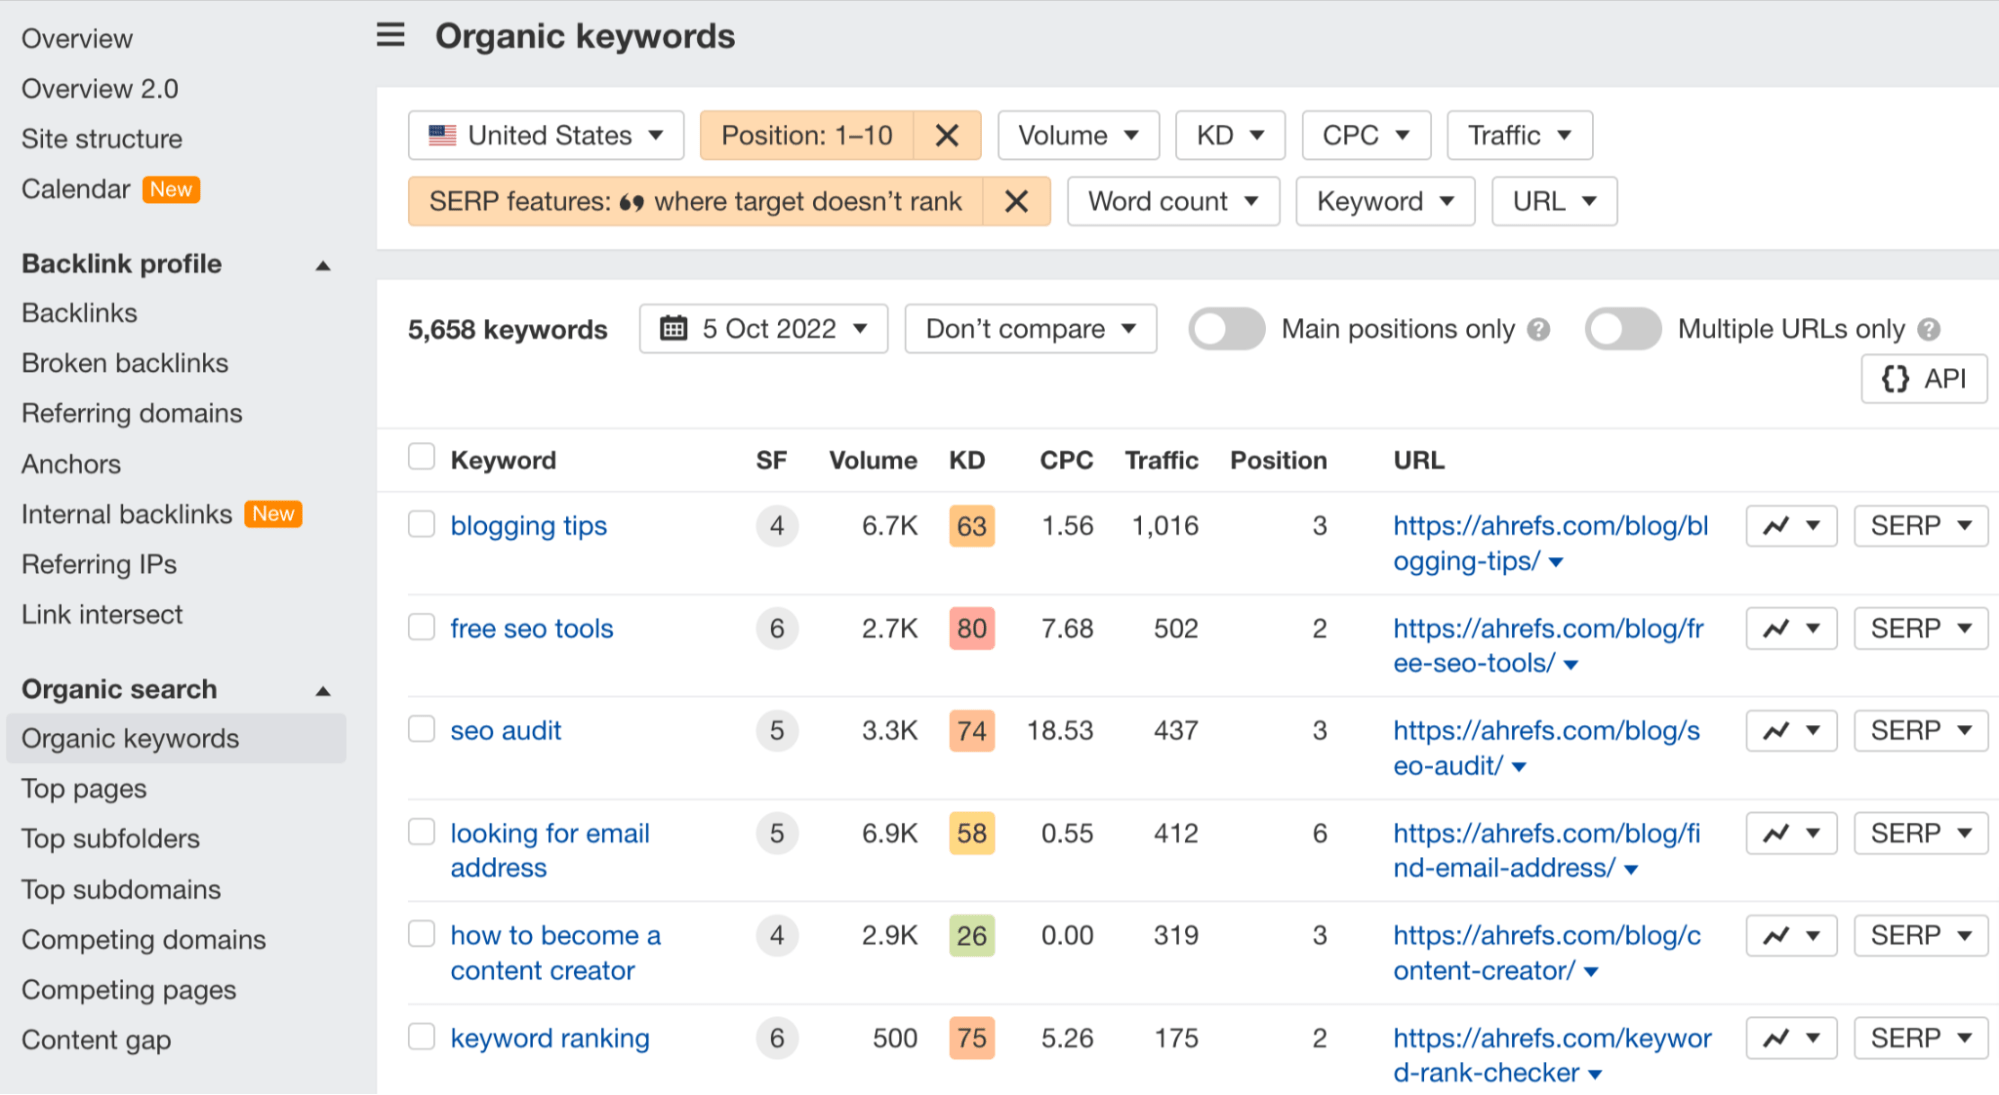 Organic keywords report in AWT